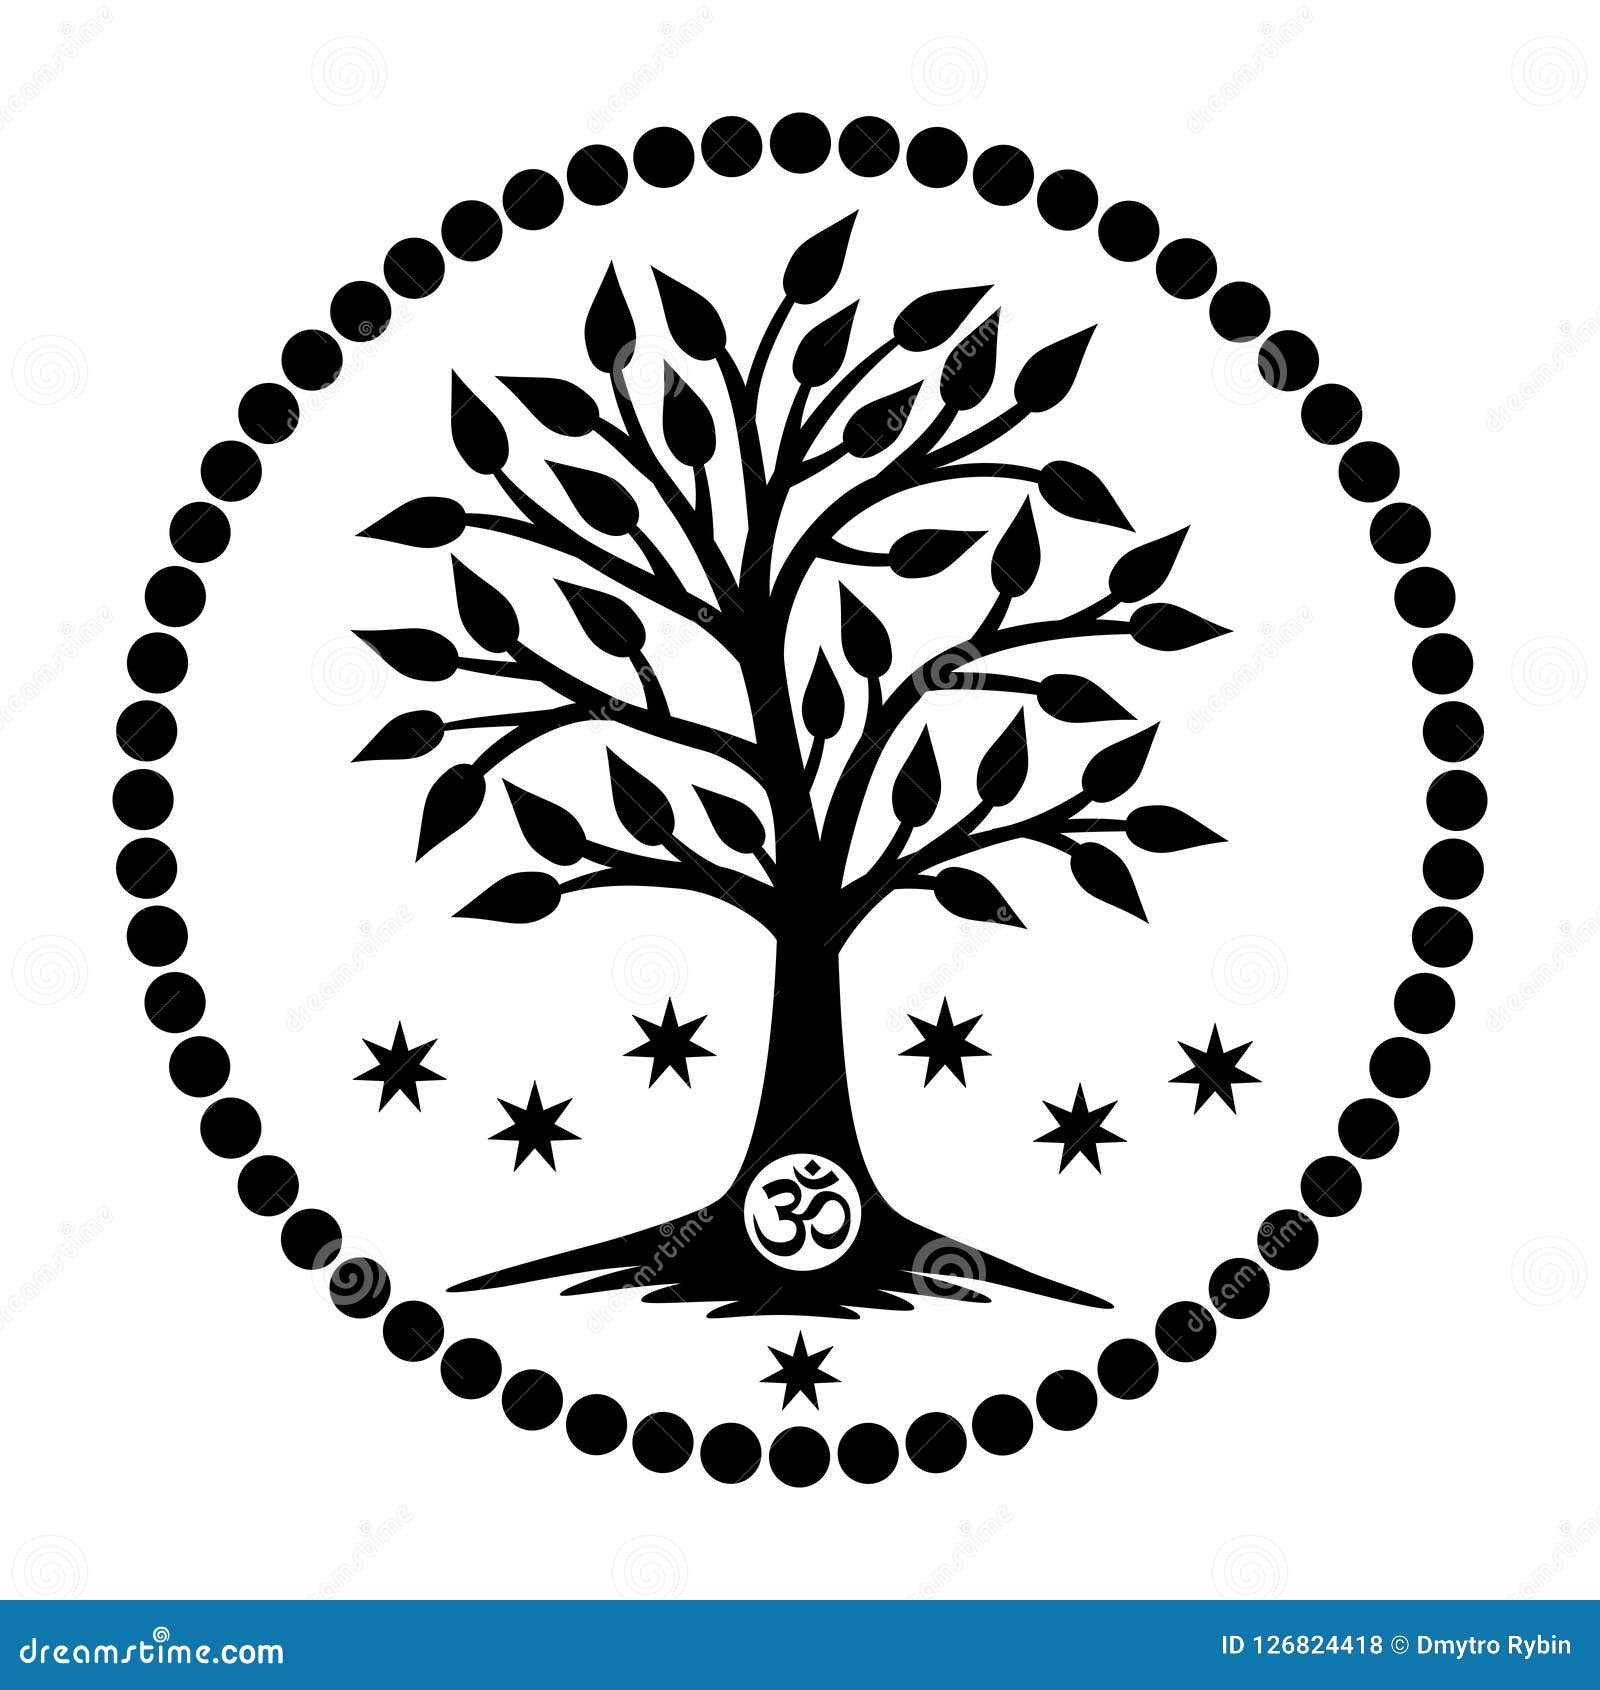 Download Tree Of Life Mandala Svg Free - Layered SVG Cut File - All ...